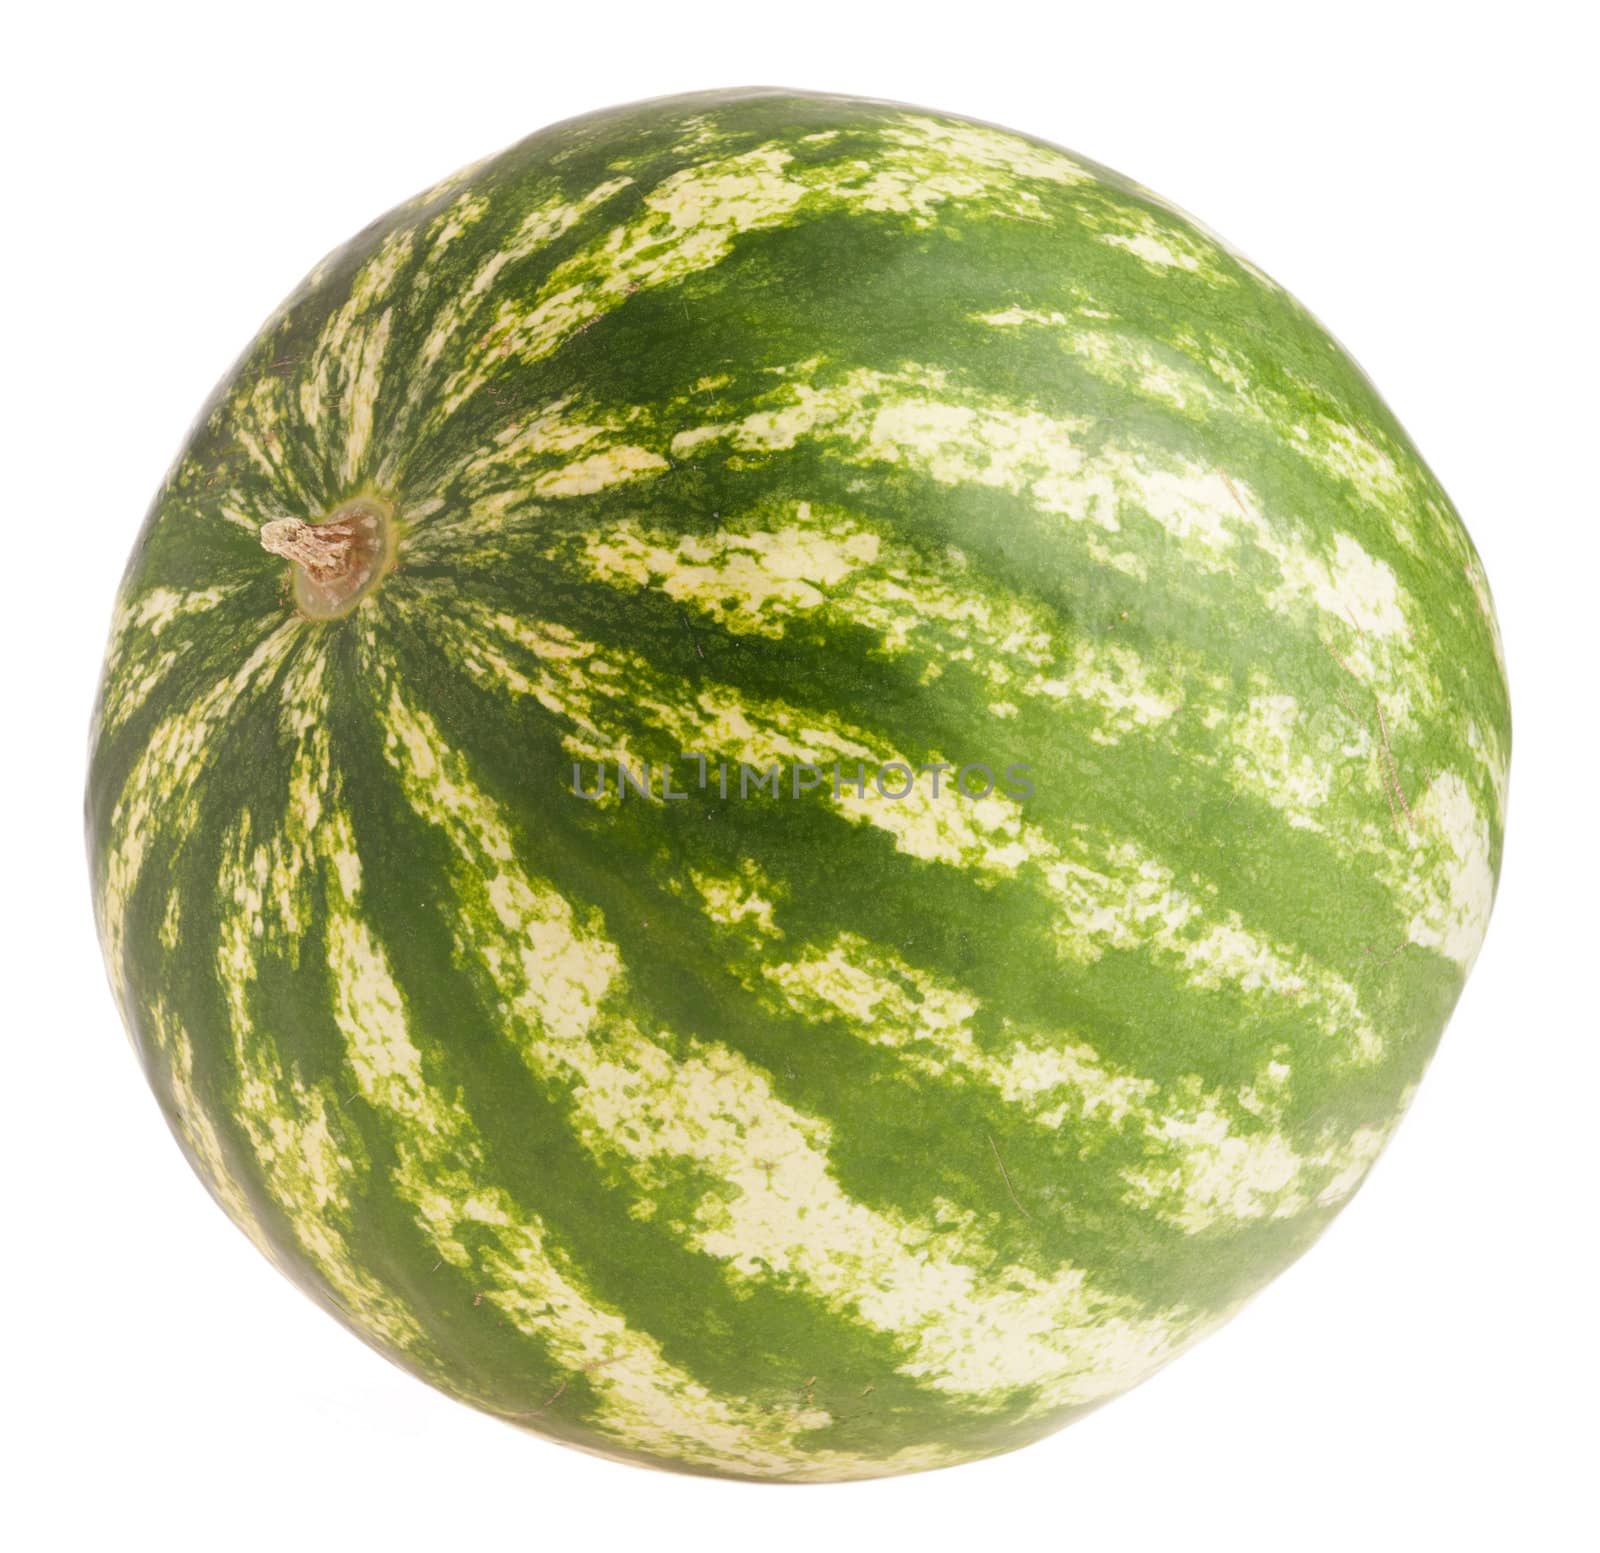 whole watermelon fruit (isolated on white background)